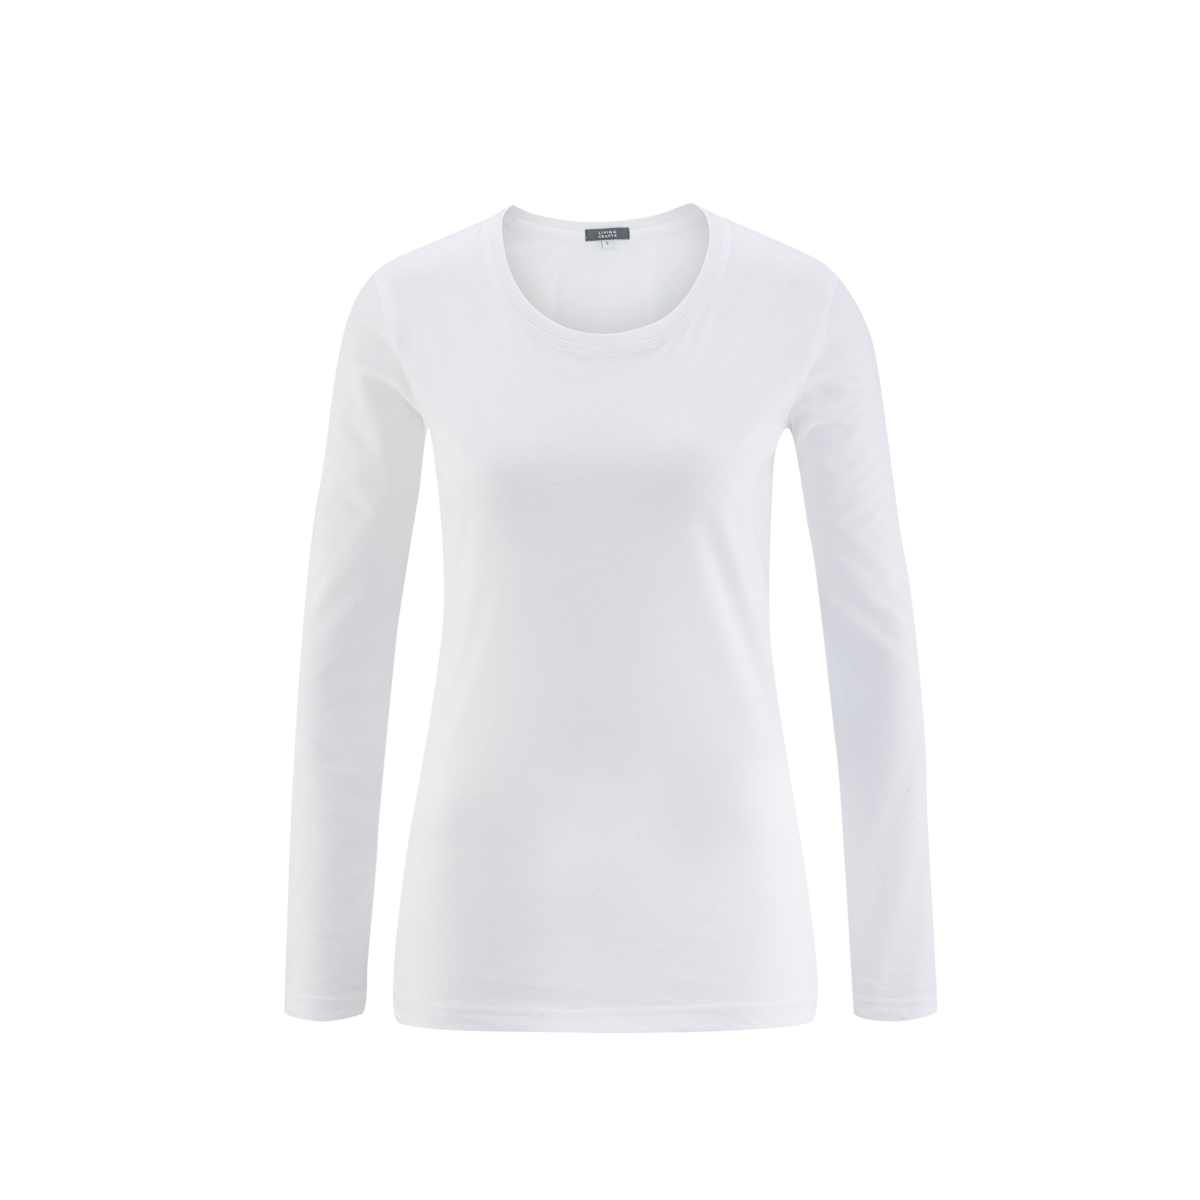 Blanc T-shirt manches longues, FIONA